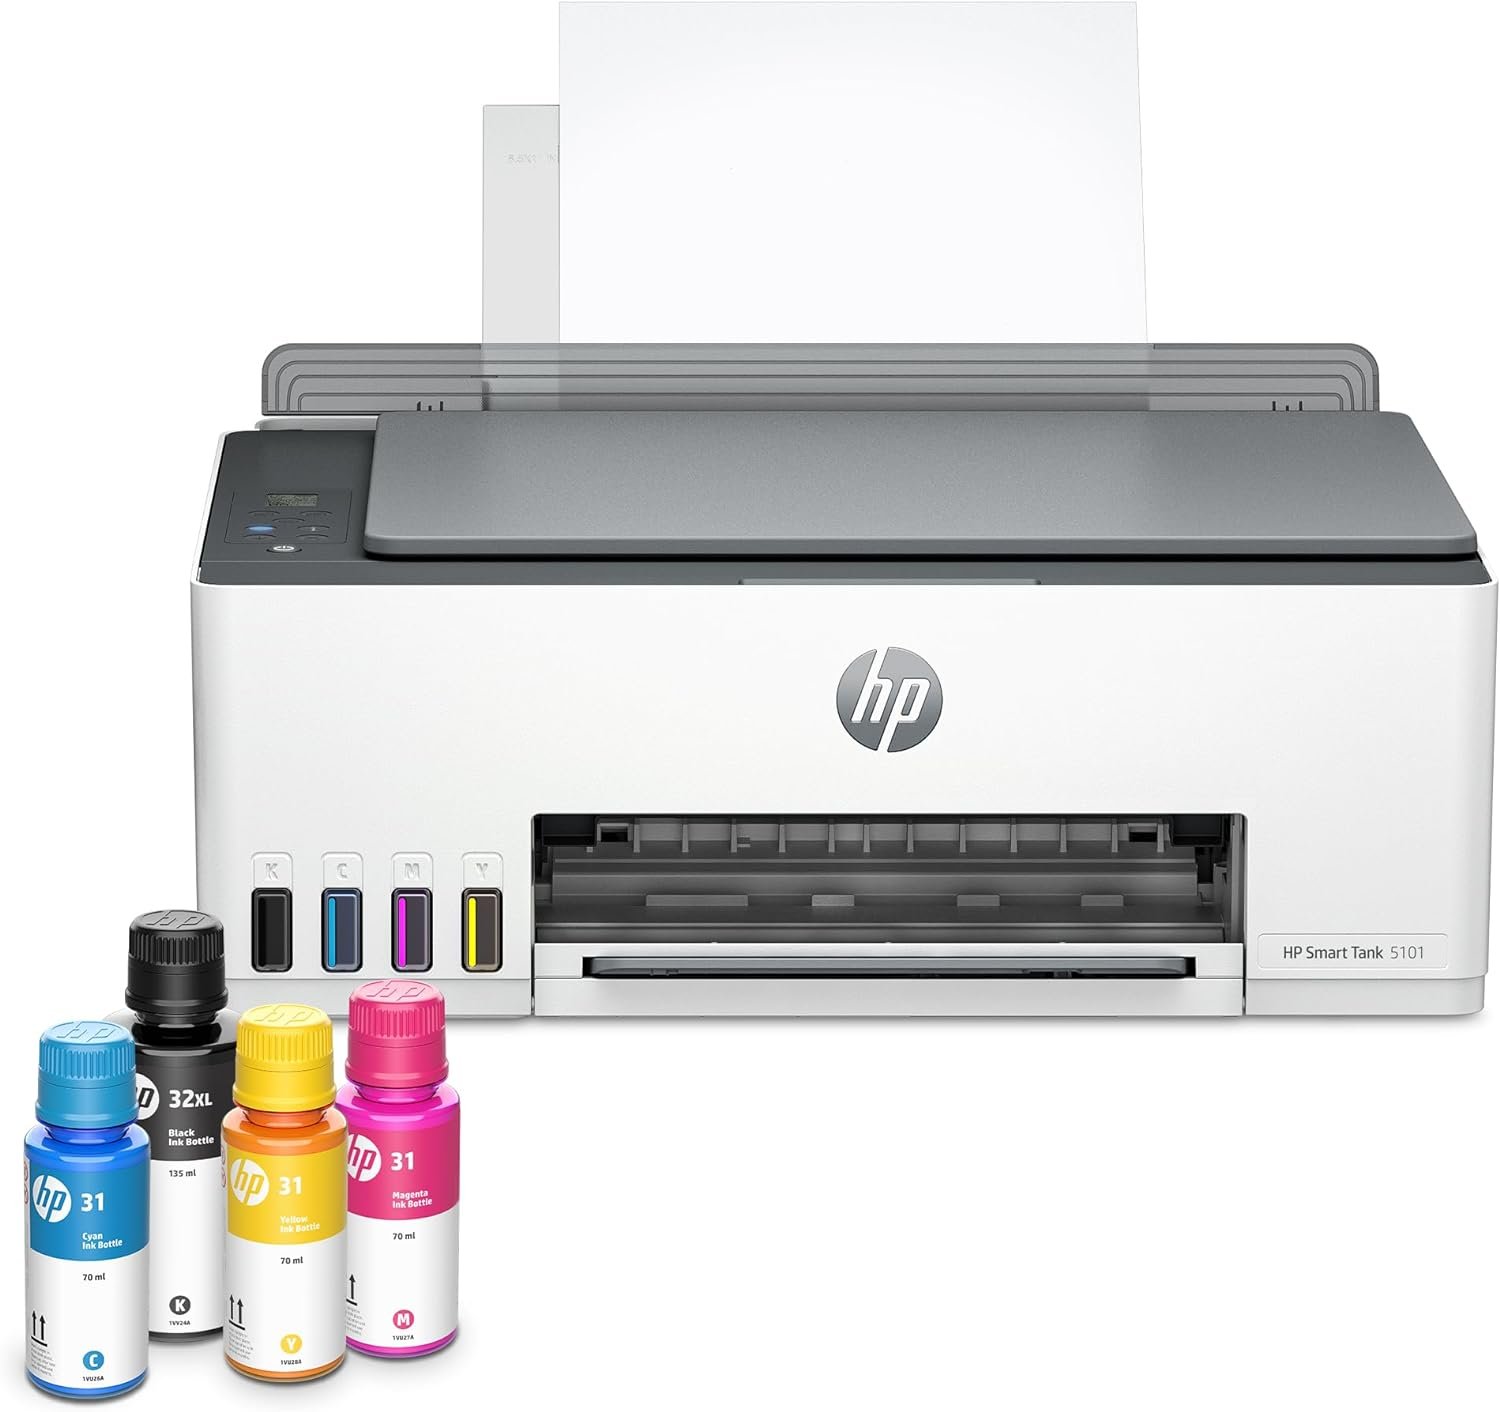 HP Smart Tank 5101 Wireless All-in-One Ink Tank Printer